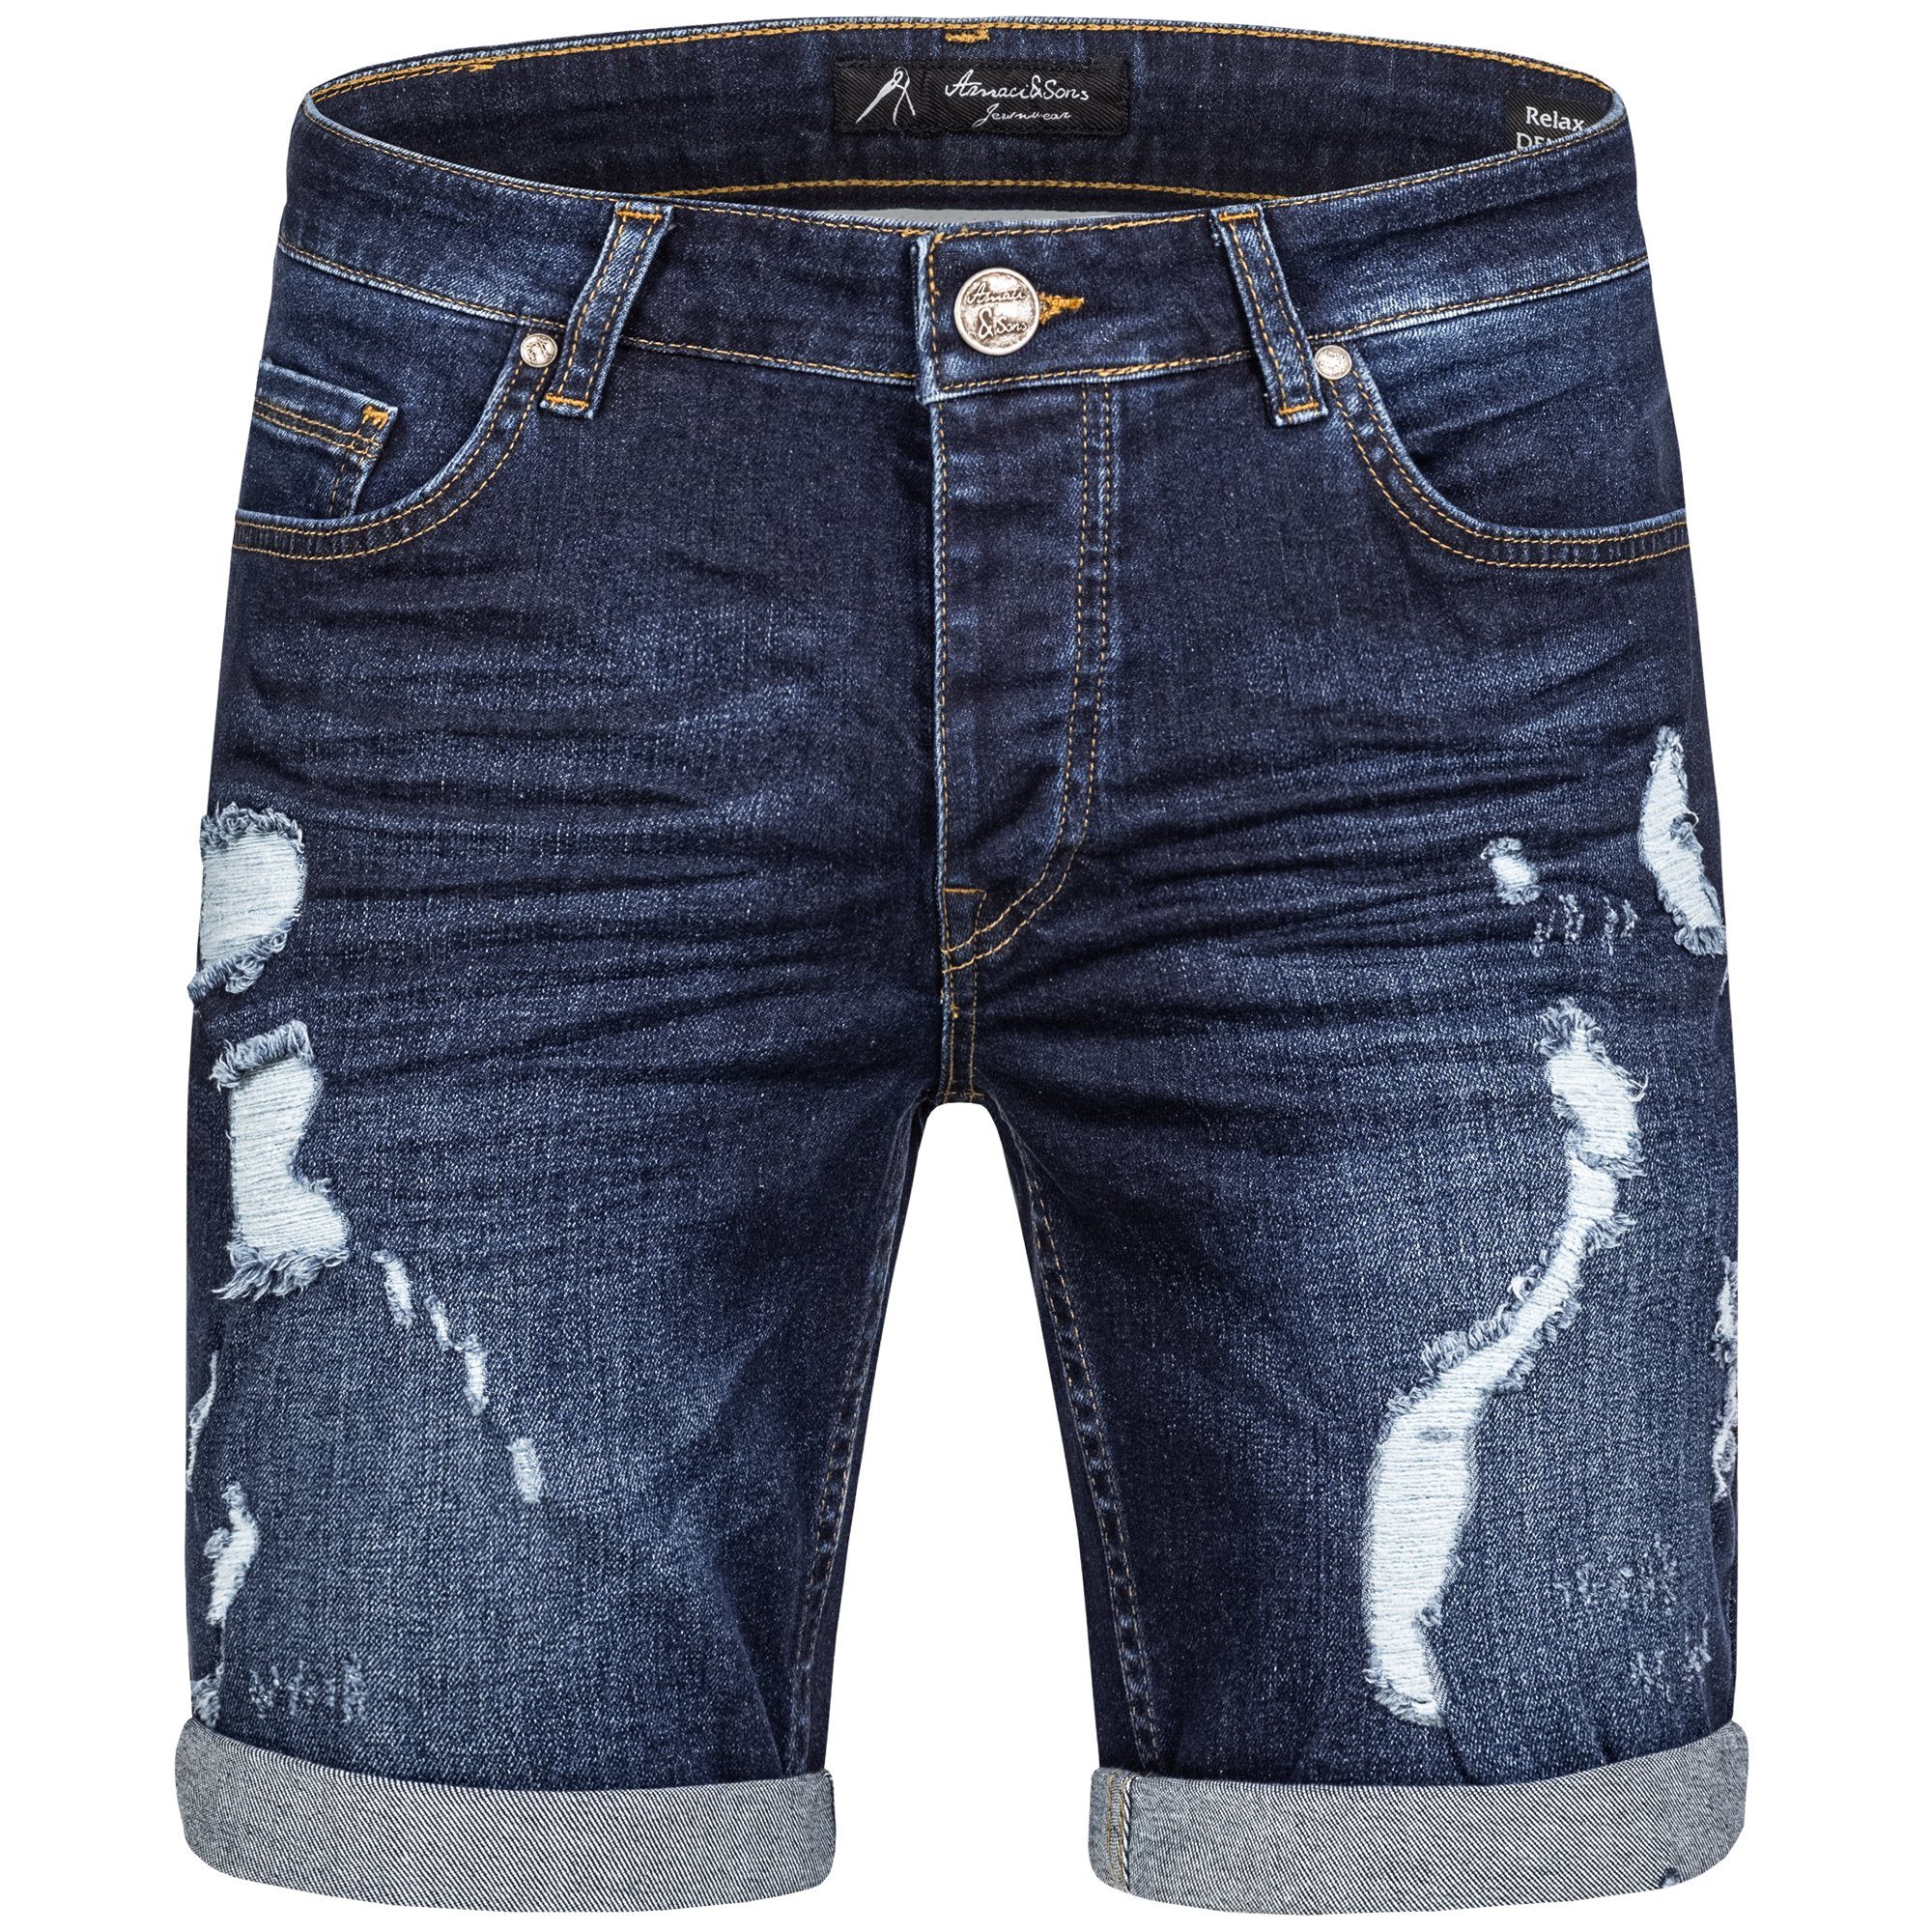 Amaci&Sons Jeansshorts Destroyed SAN Dunkelblau DIEGO Shorts Jeans